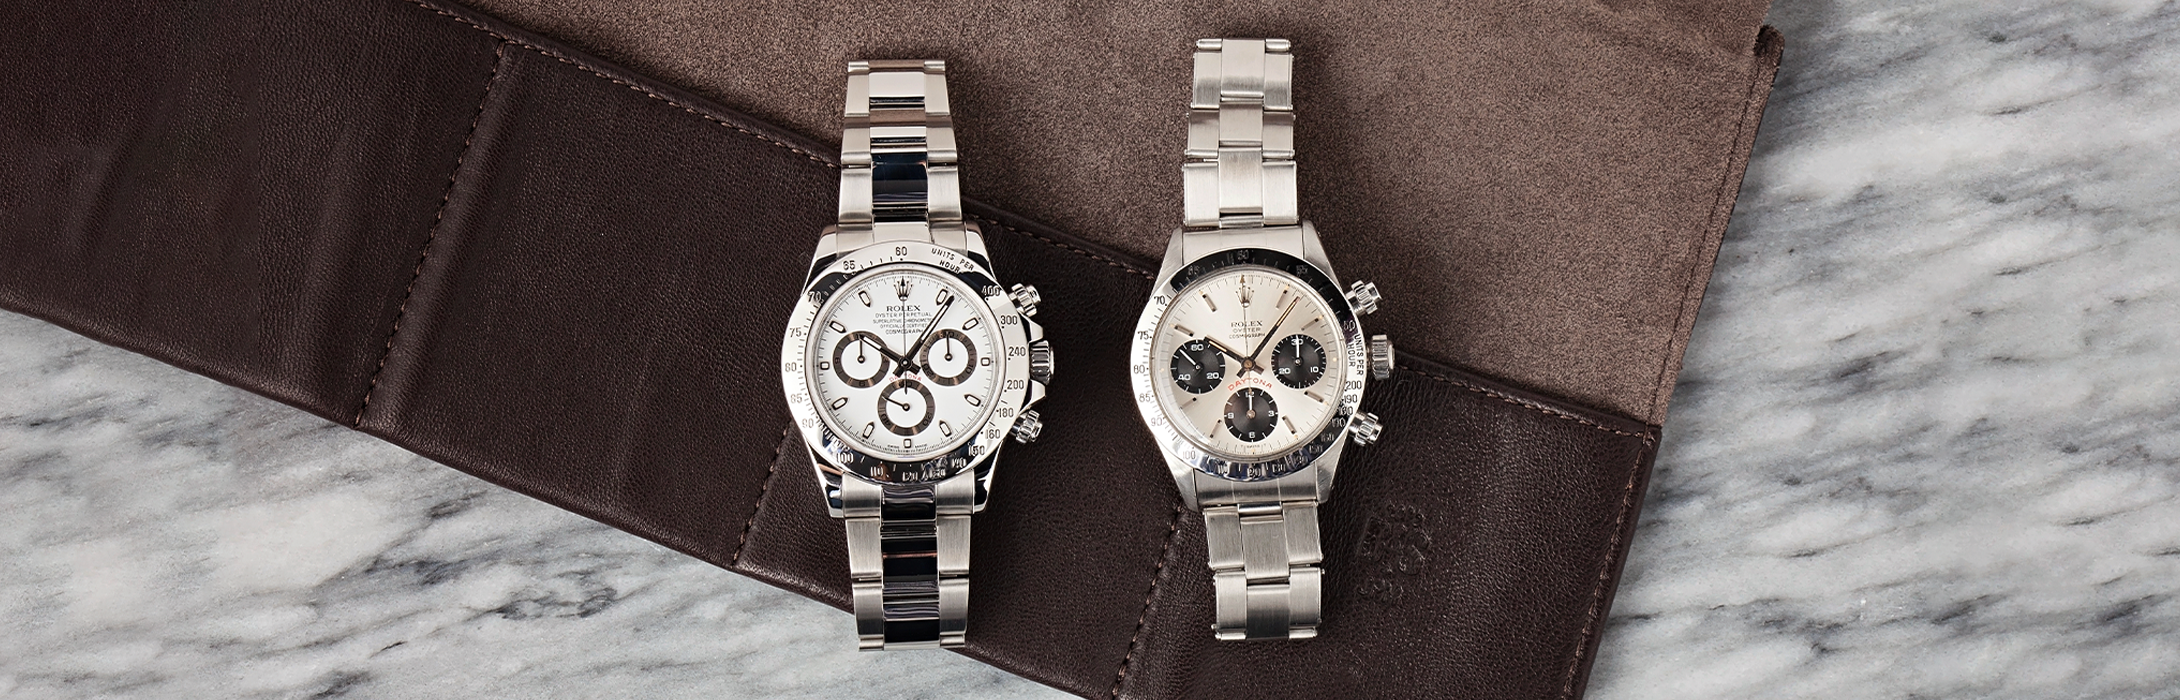 Rolex Daytona - Modern vs. Vintage Comparison Guide Bob's Watches